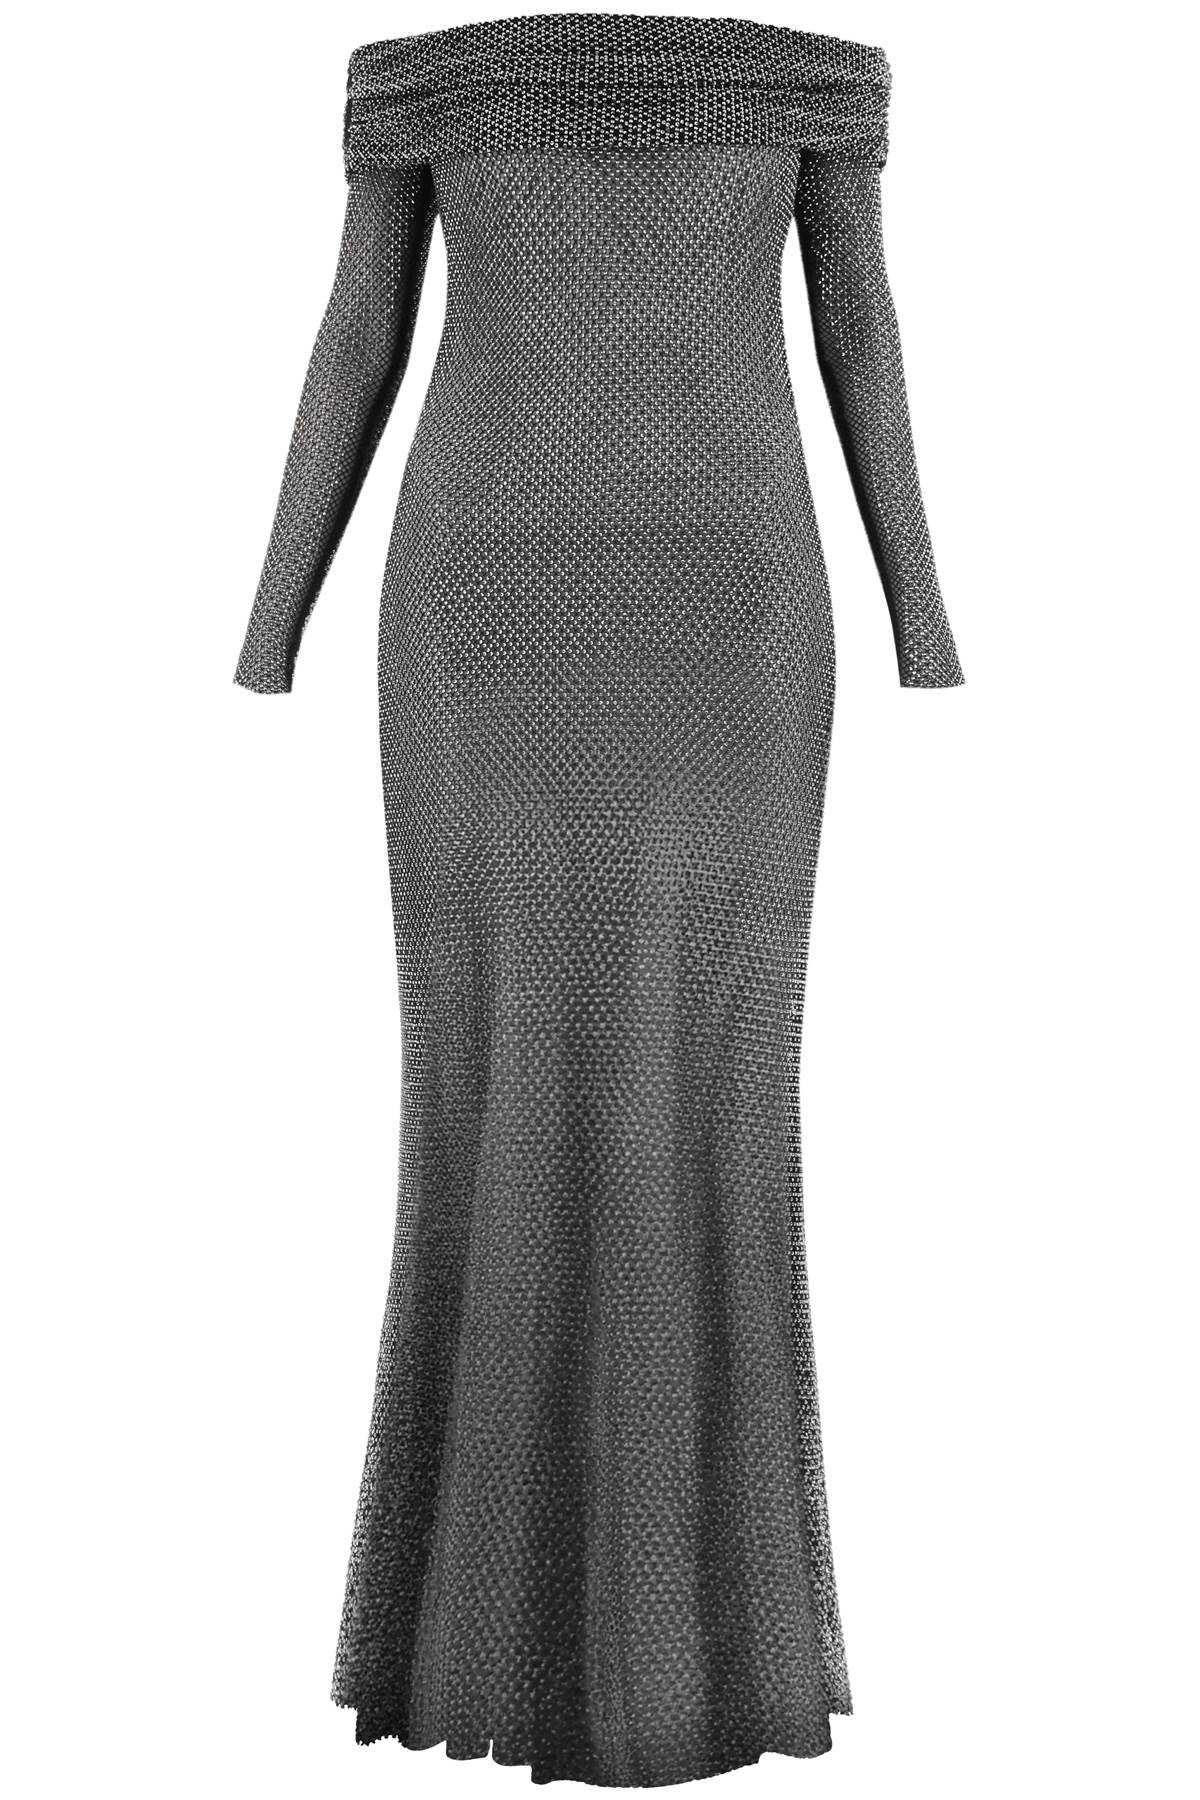  SELF PORTRAIT maxi dress in fishnet with rhinestones